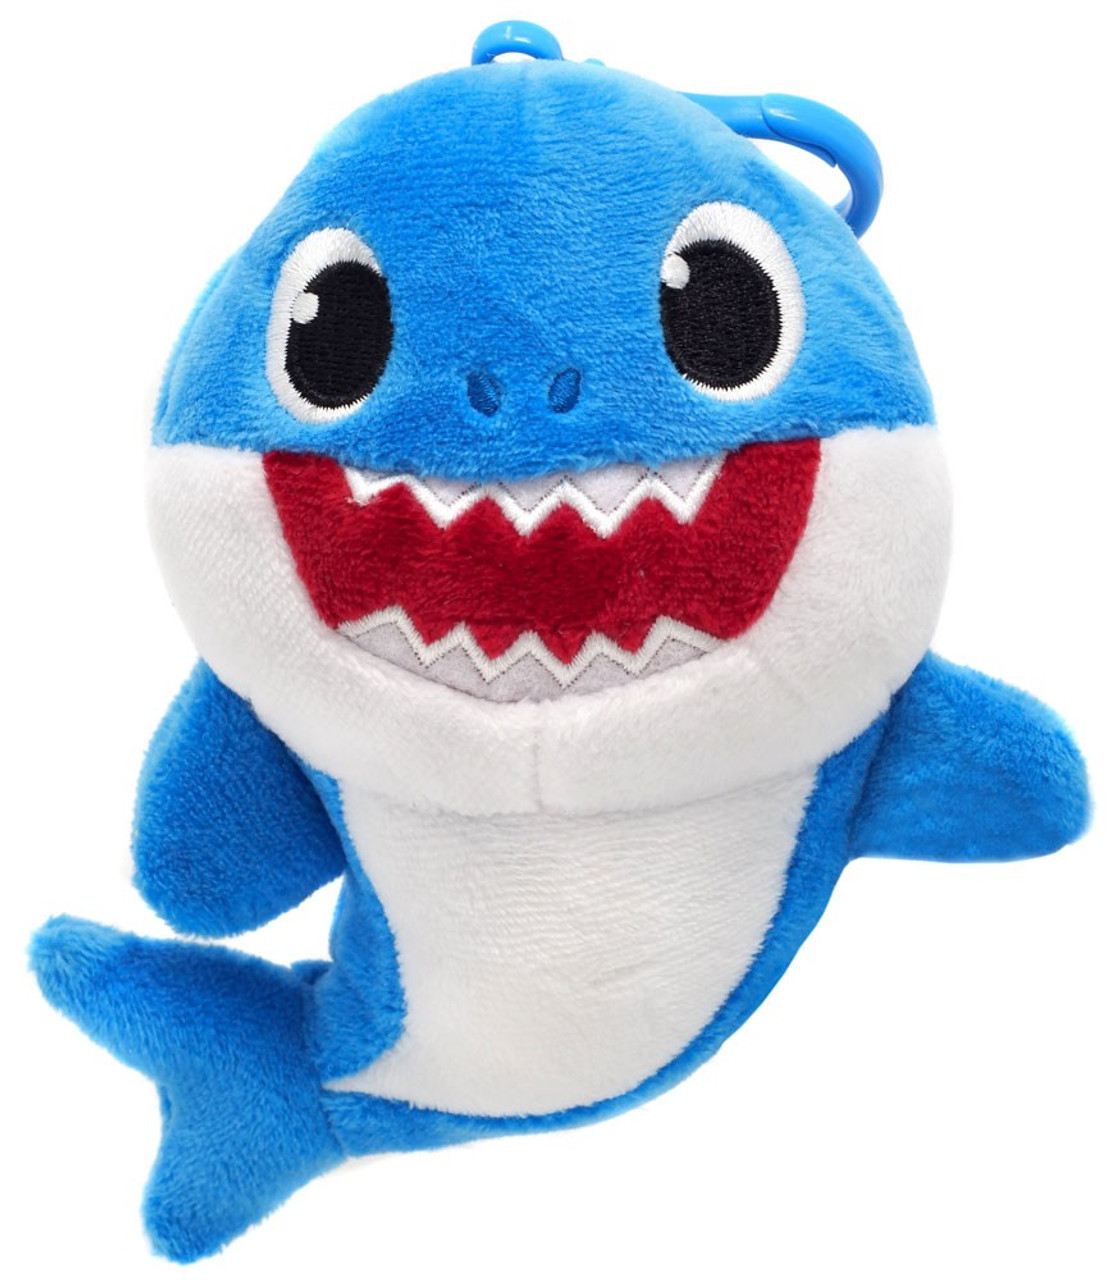 daddy shark stuffed animal